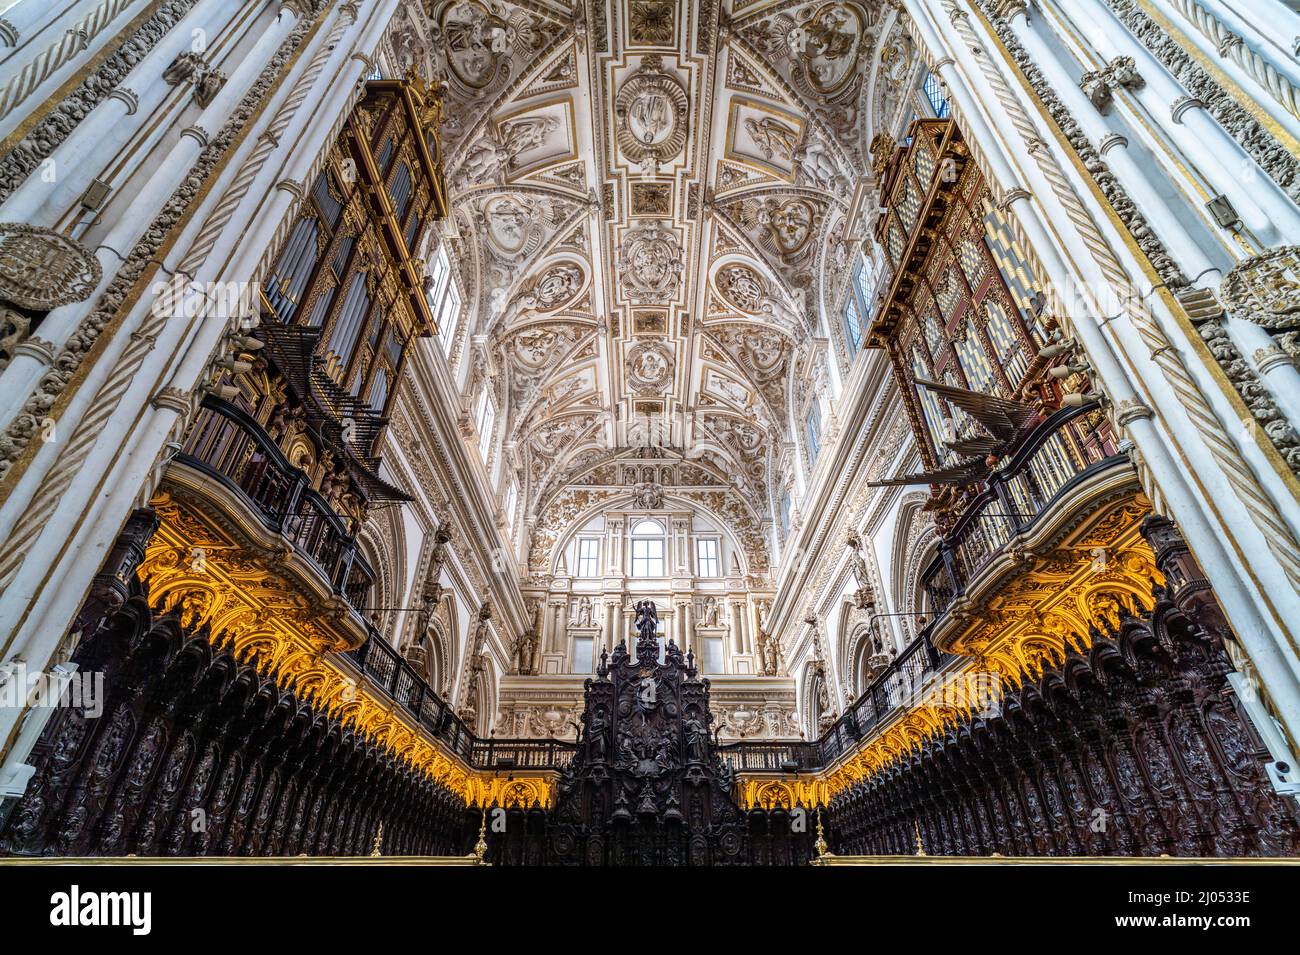 Orgel und Chor im Innenraum der Kathedrale - Mezquita - Catedral de Córdoba in Cordoba, Andalusien, Spanien | Orgel und Chor der Kathedrale - ME Stockfoto